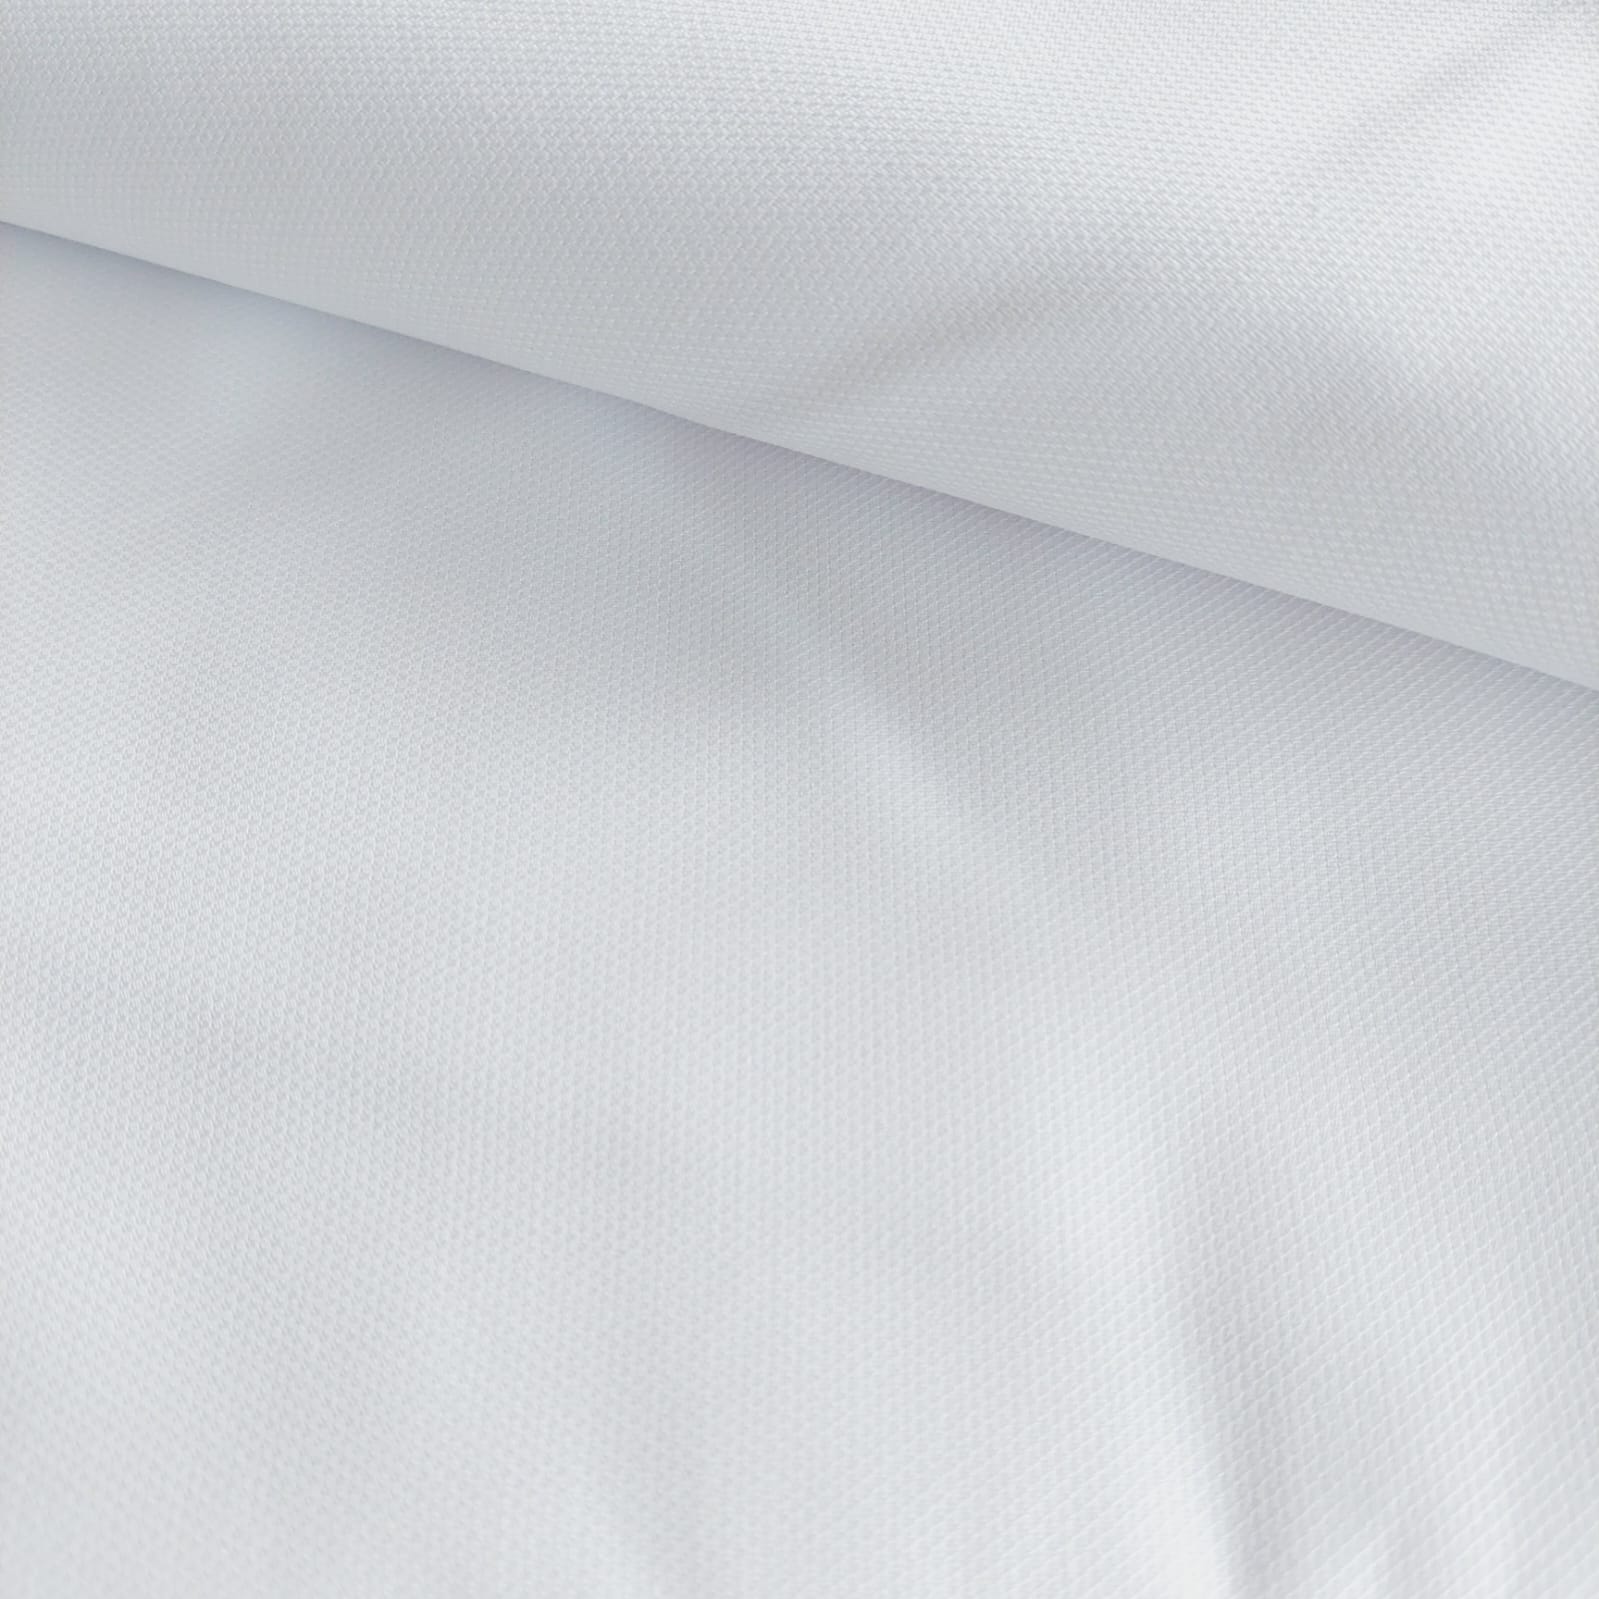 Tecido fustao branco - Fernando Maluhy(50x1,50cm)               